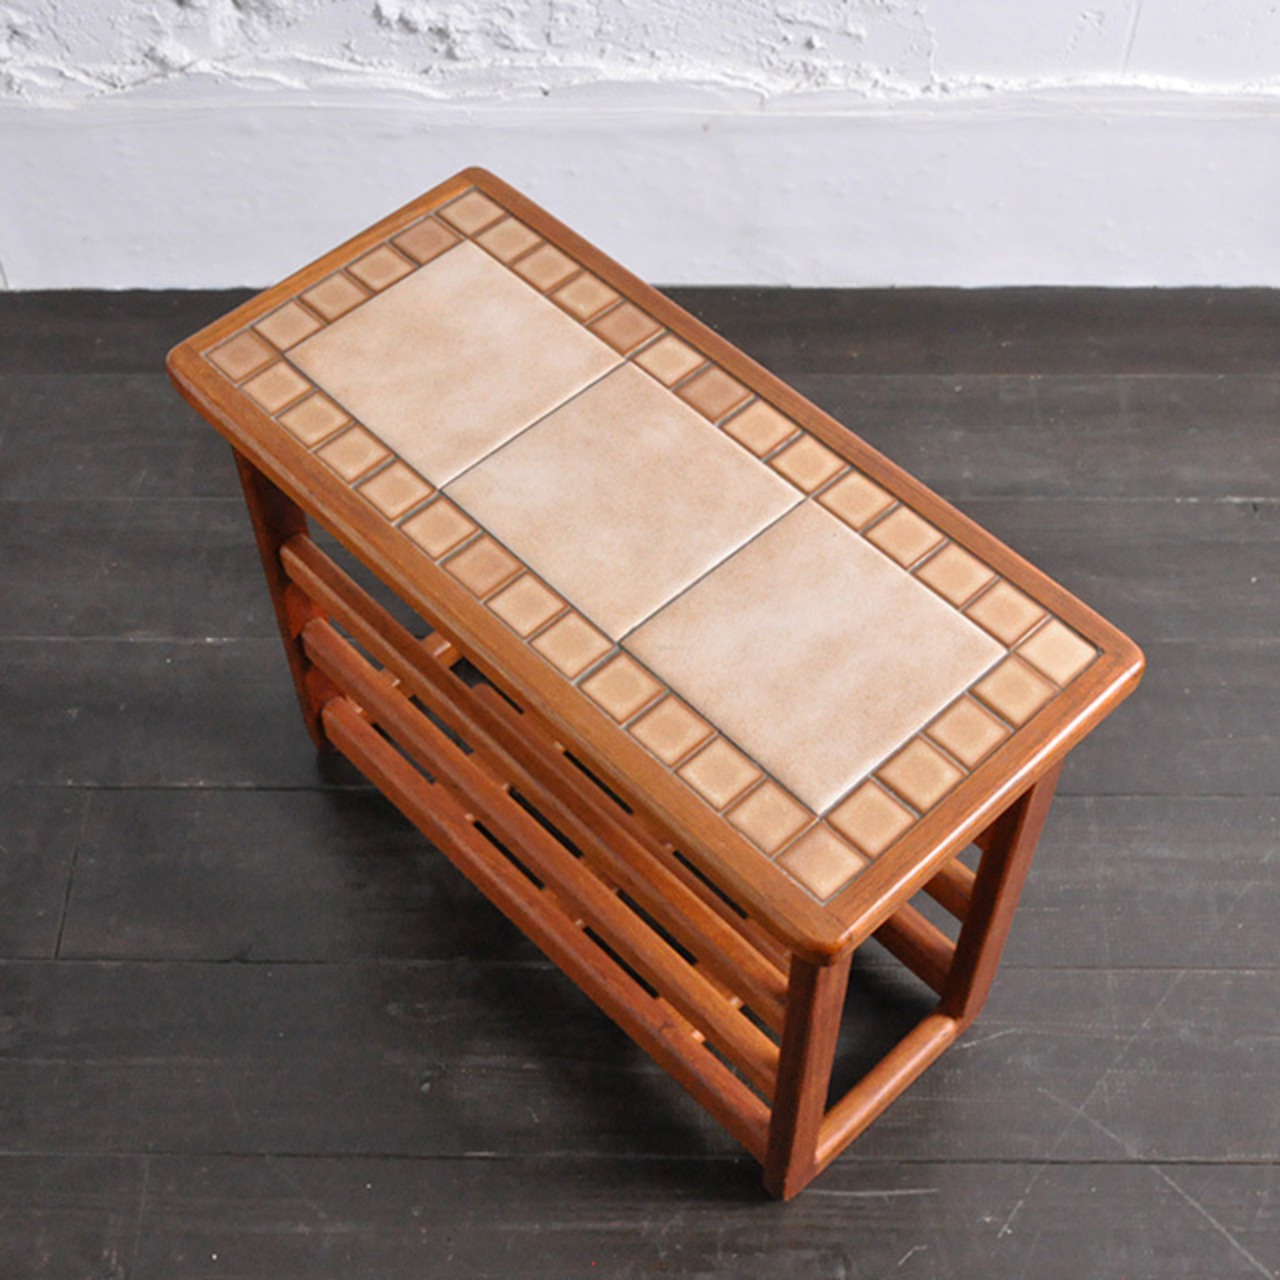 Teak Tile-Top Side Table / チーク タイルトップ サイドテーブル / 1806-0072